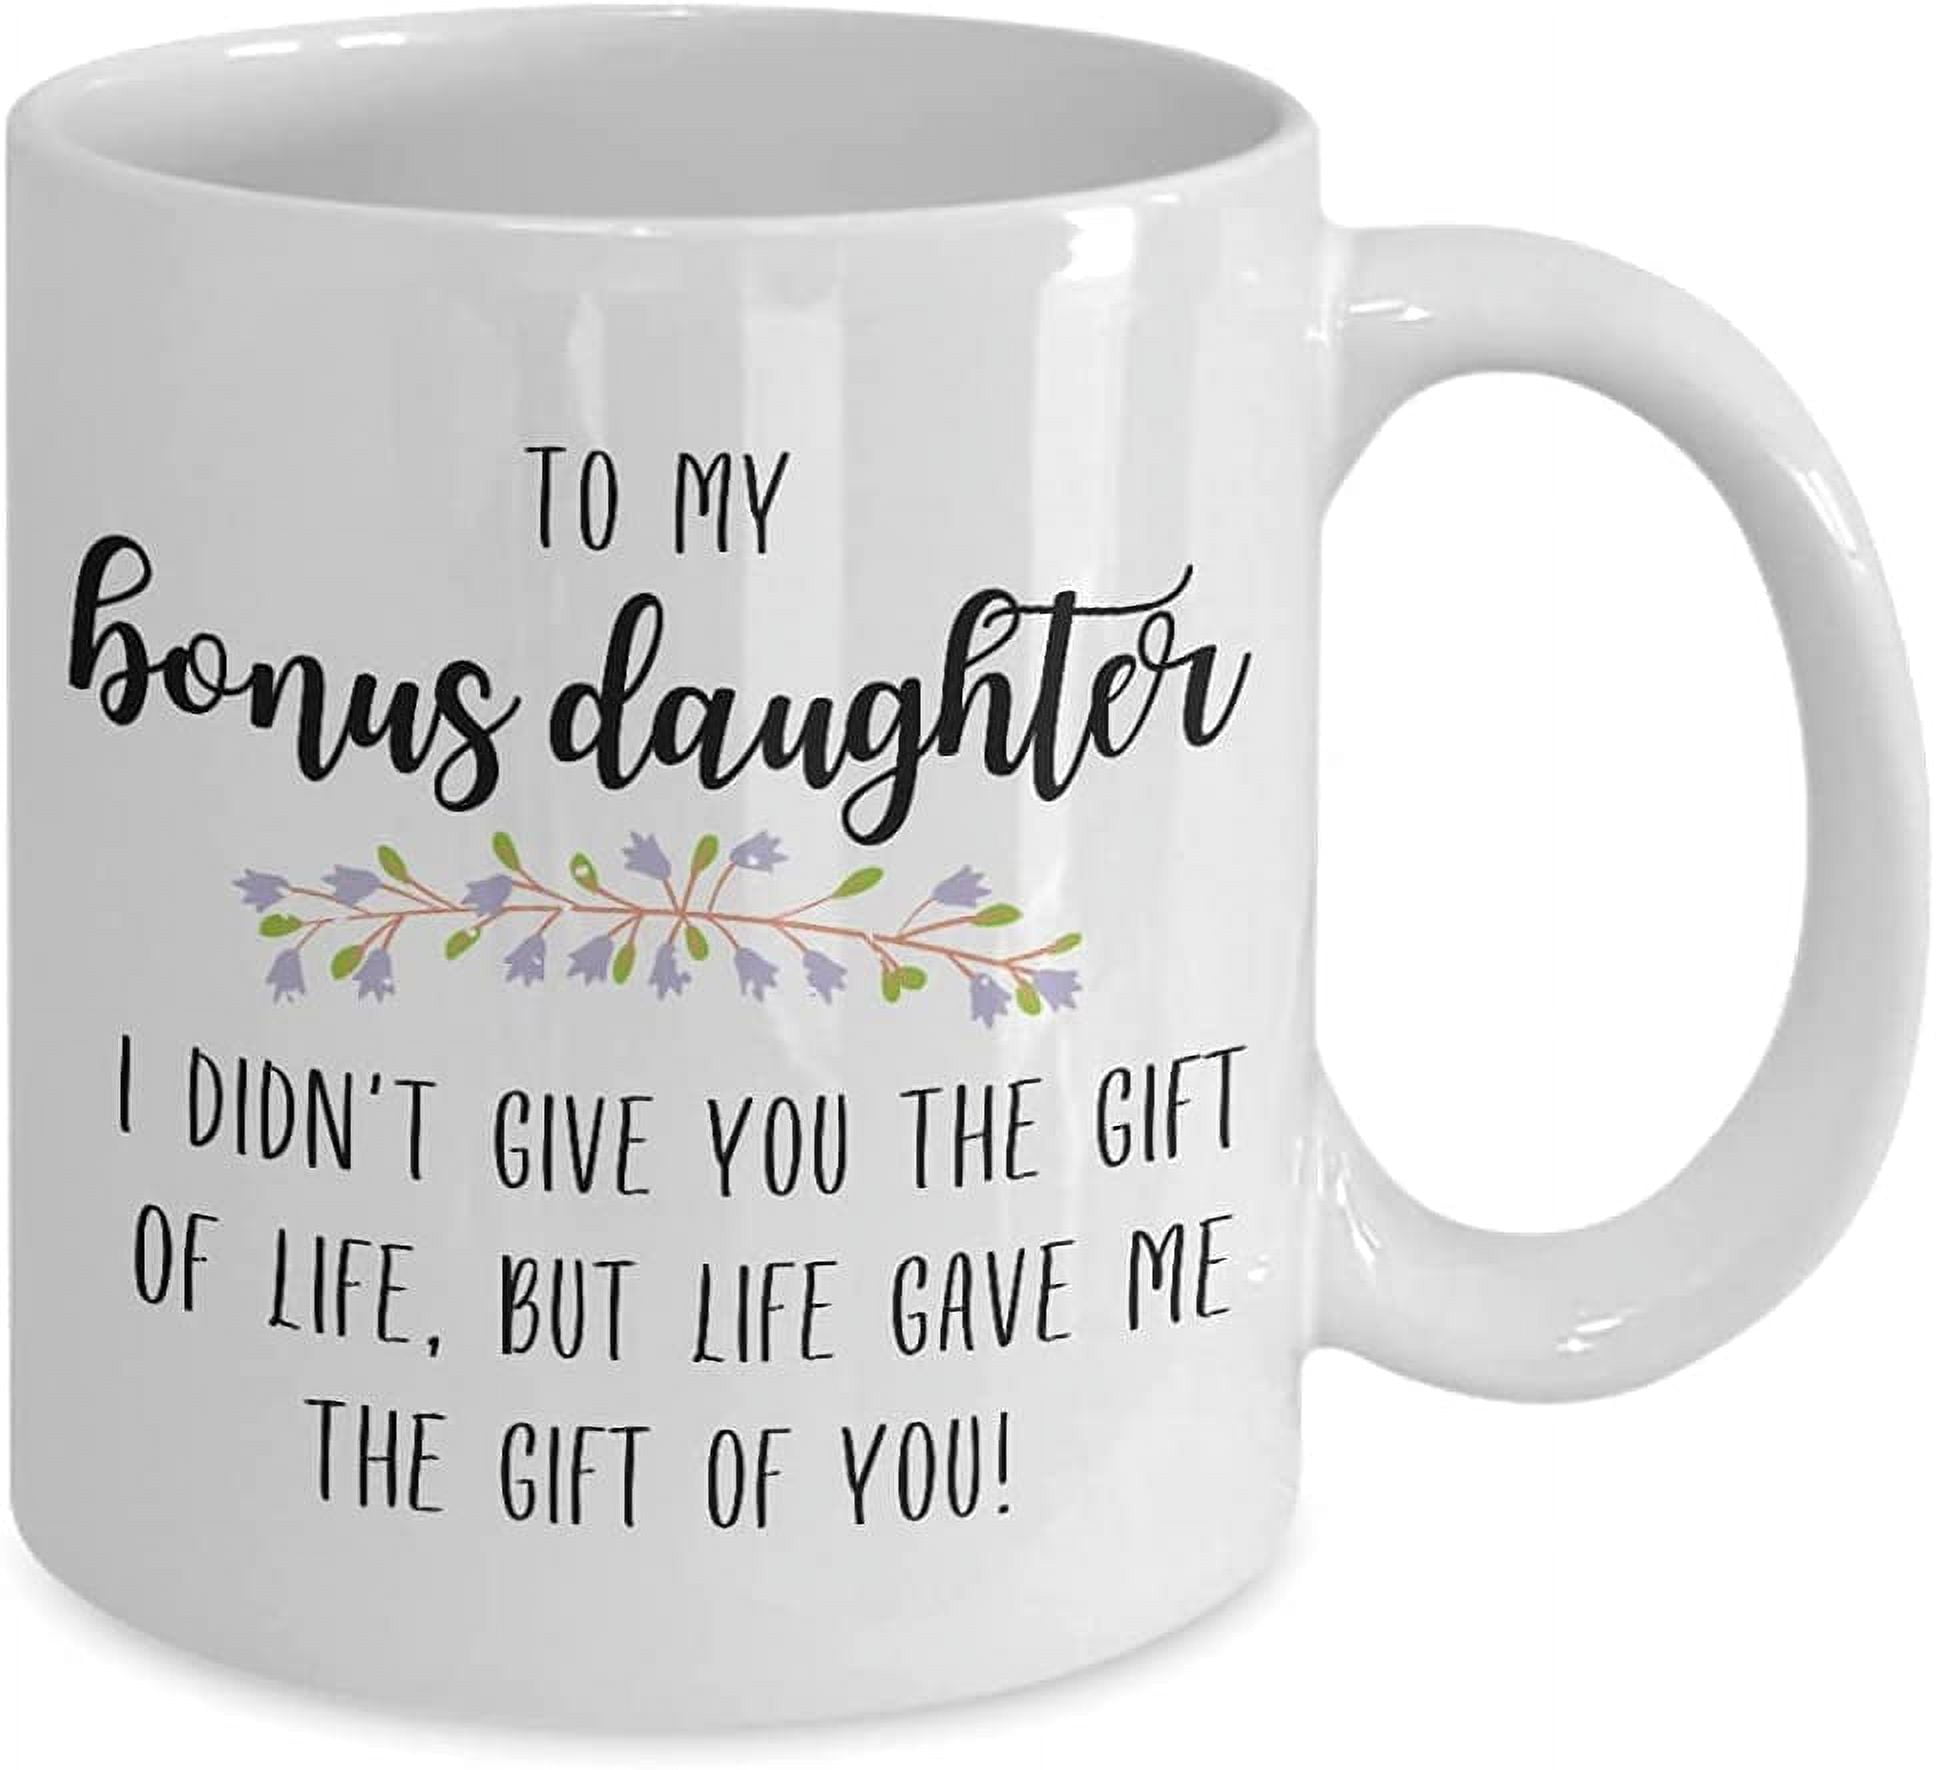 Mom You're My Cup of Tea- 11-Ounce Funny Tea Mug